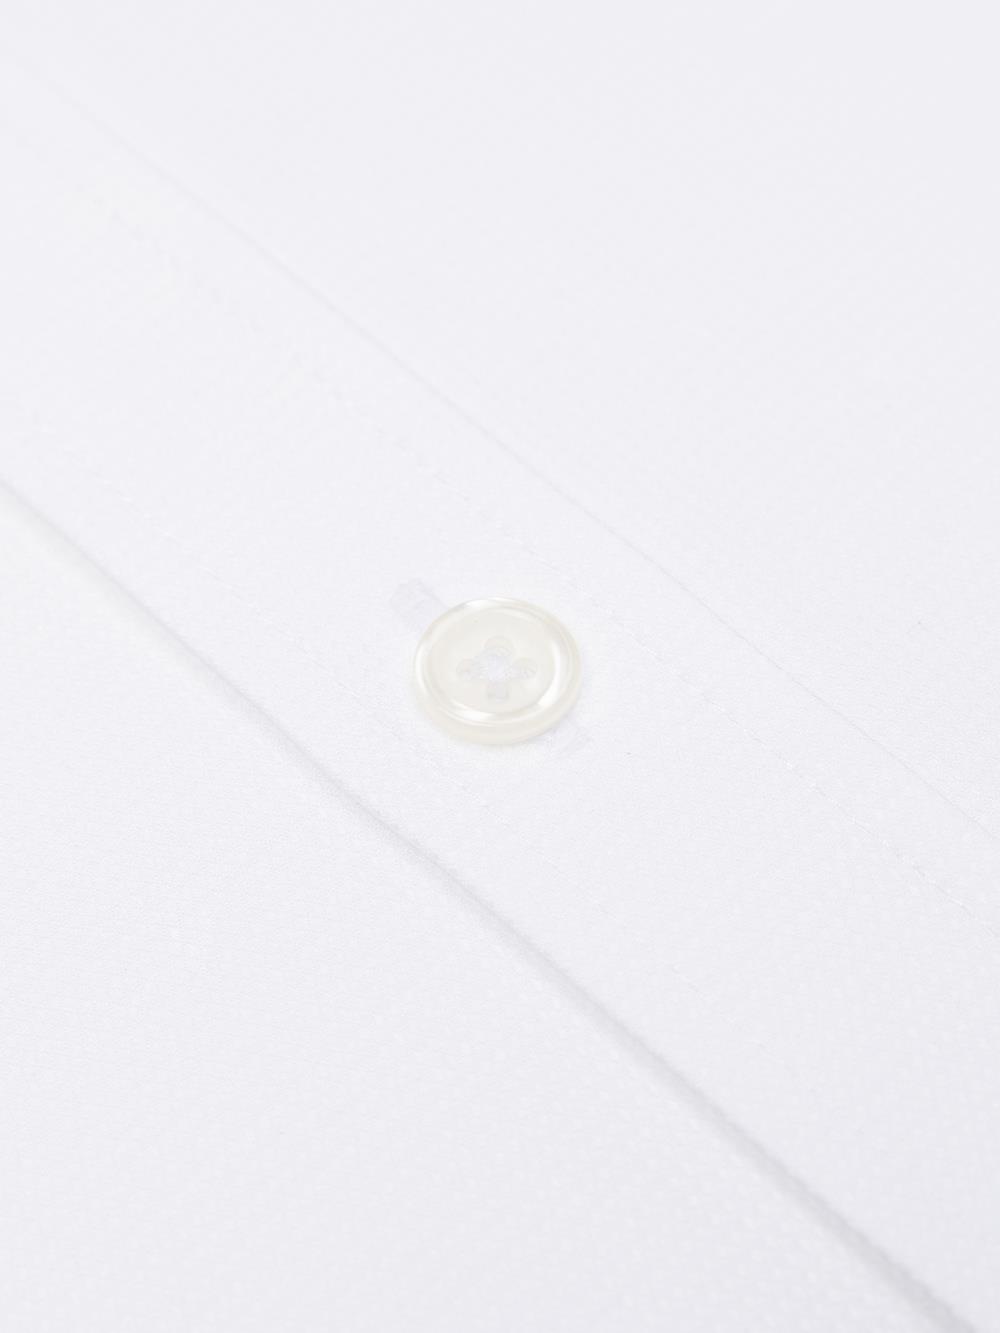 Bayers wit structuur overhemd - Button-down kraag